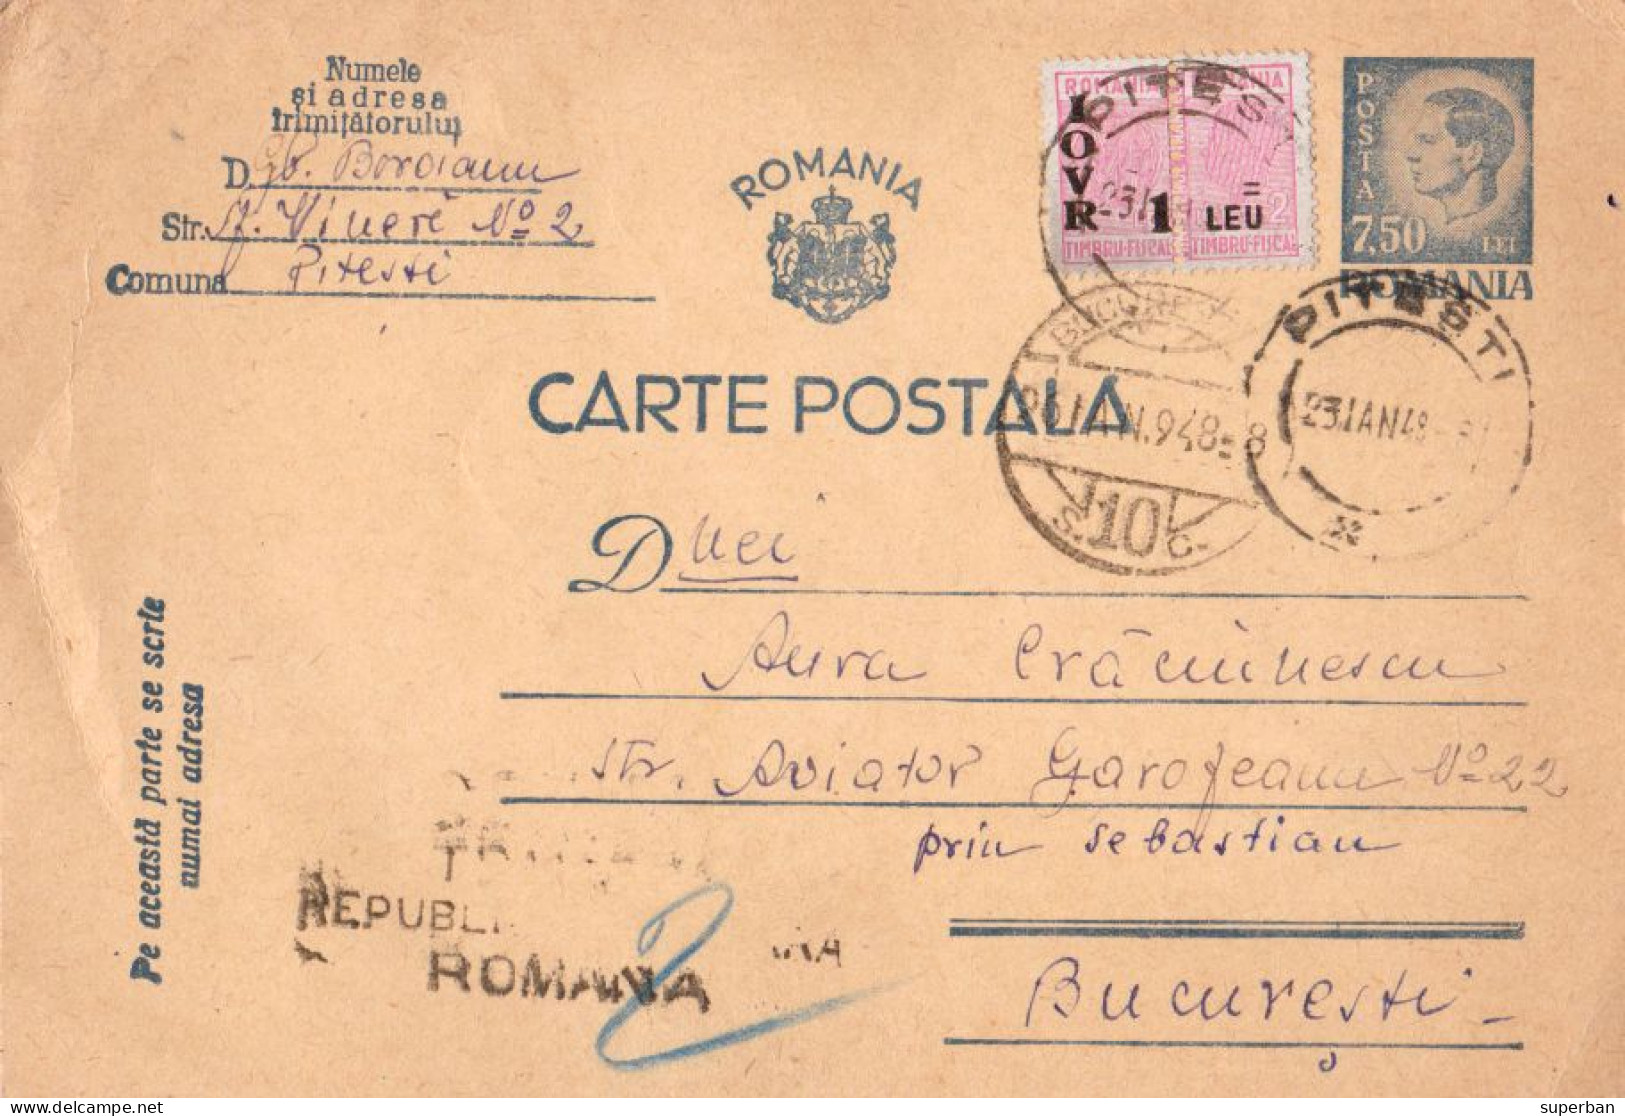 ROMANIA : CARTE POSTALA / CARTE POSTALE / POSTCARD + IOVR 1 LEU : PITESTI -> BUCURESTI - IANUARIE 1948 (an740) - Postal Stationery